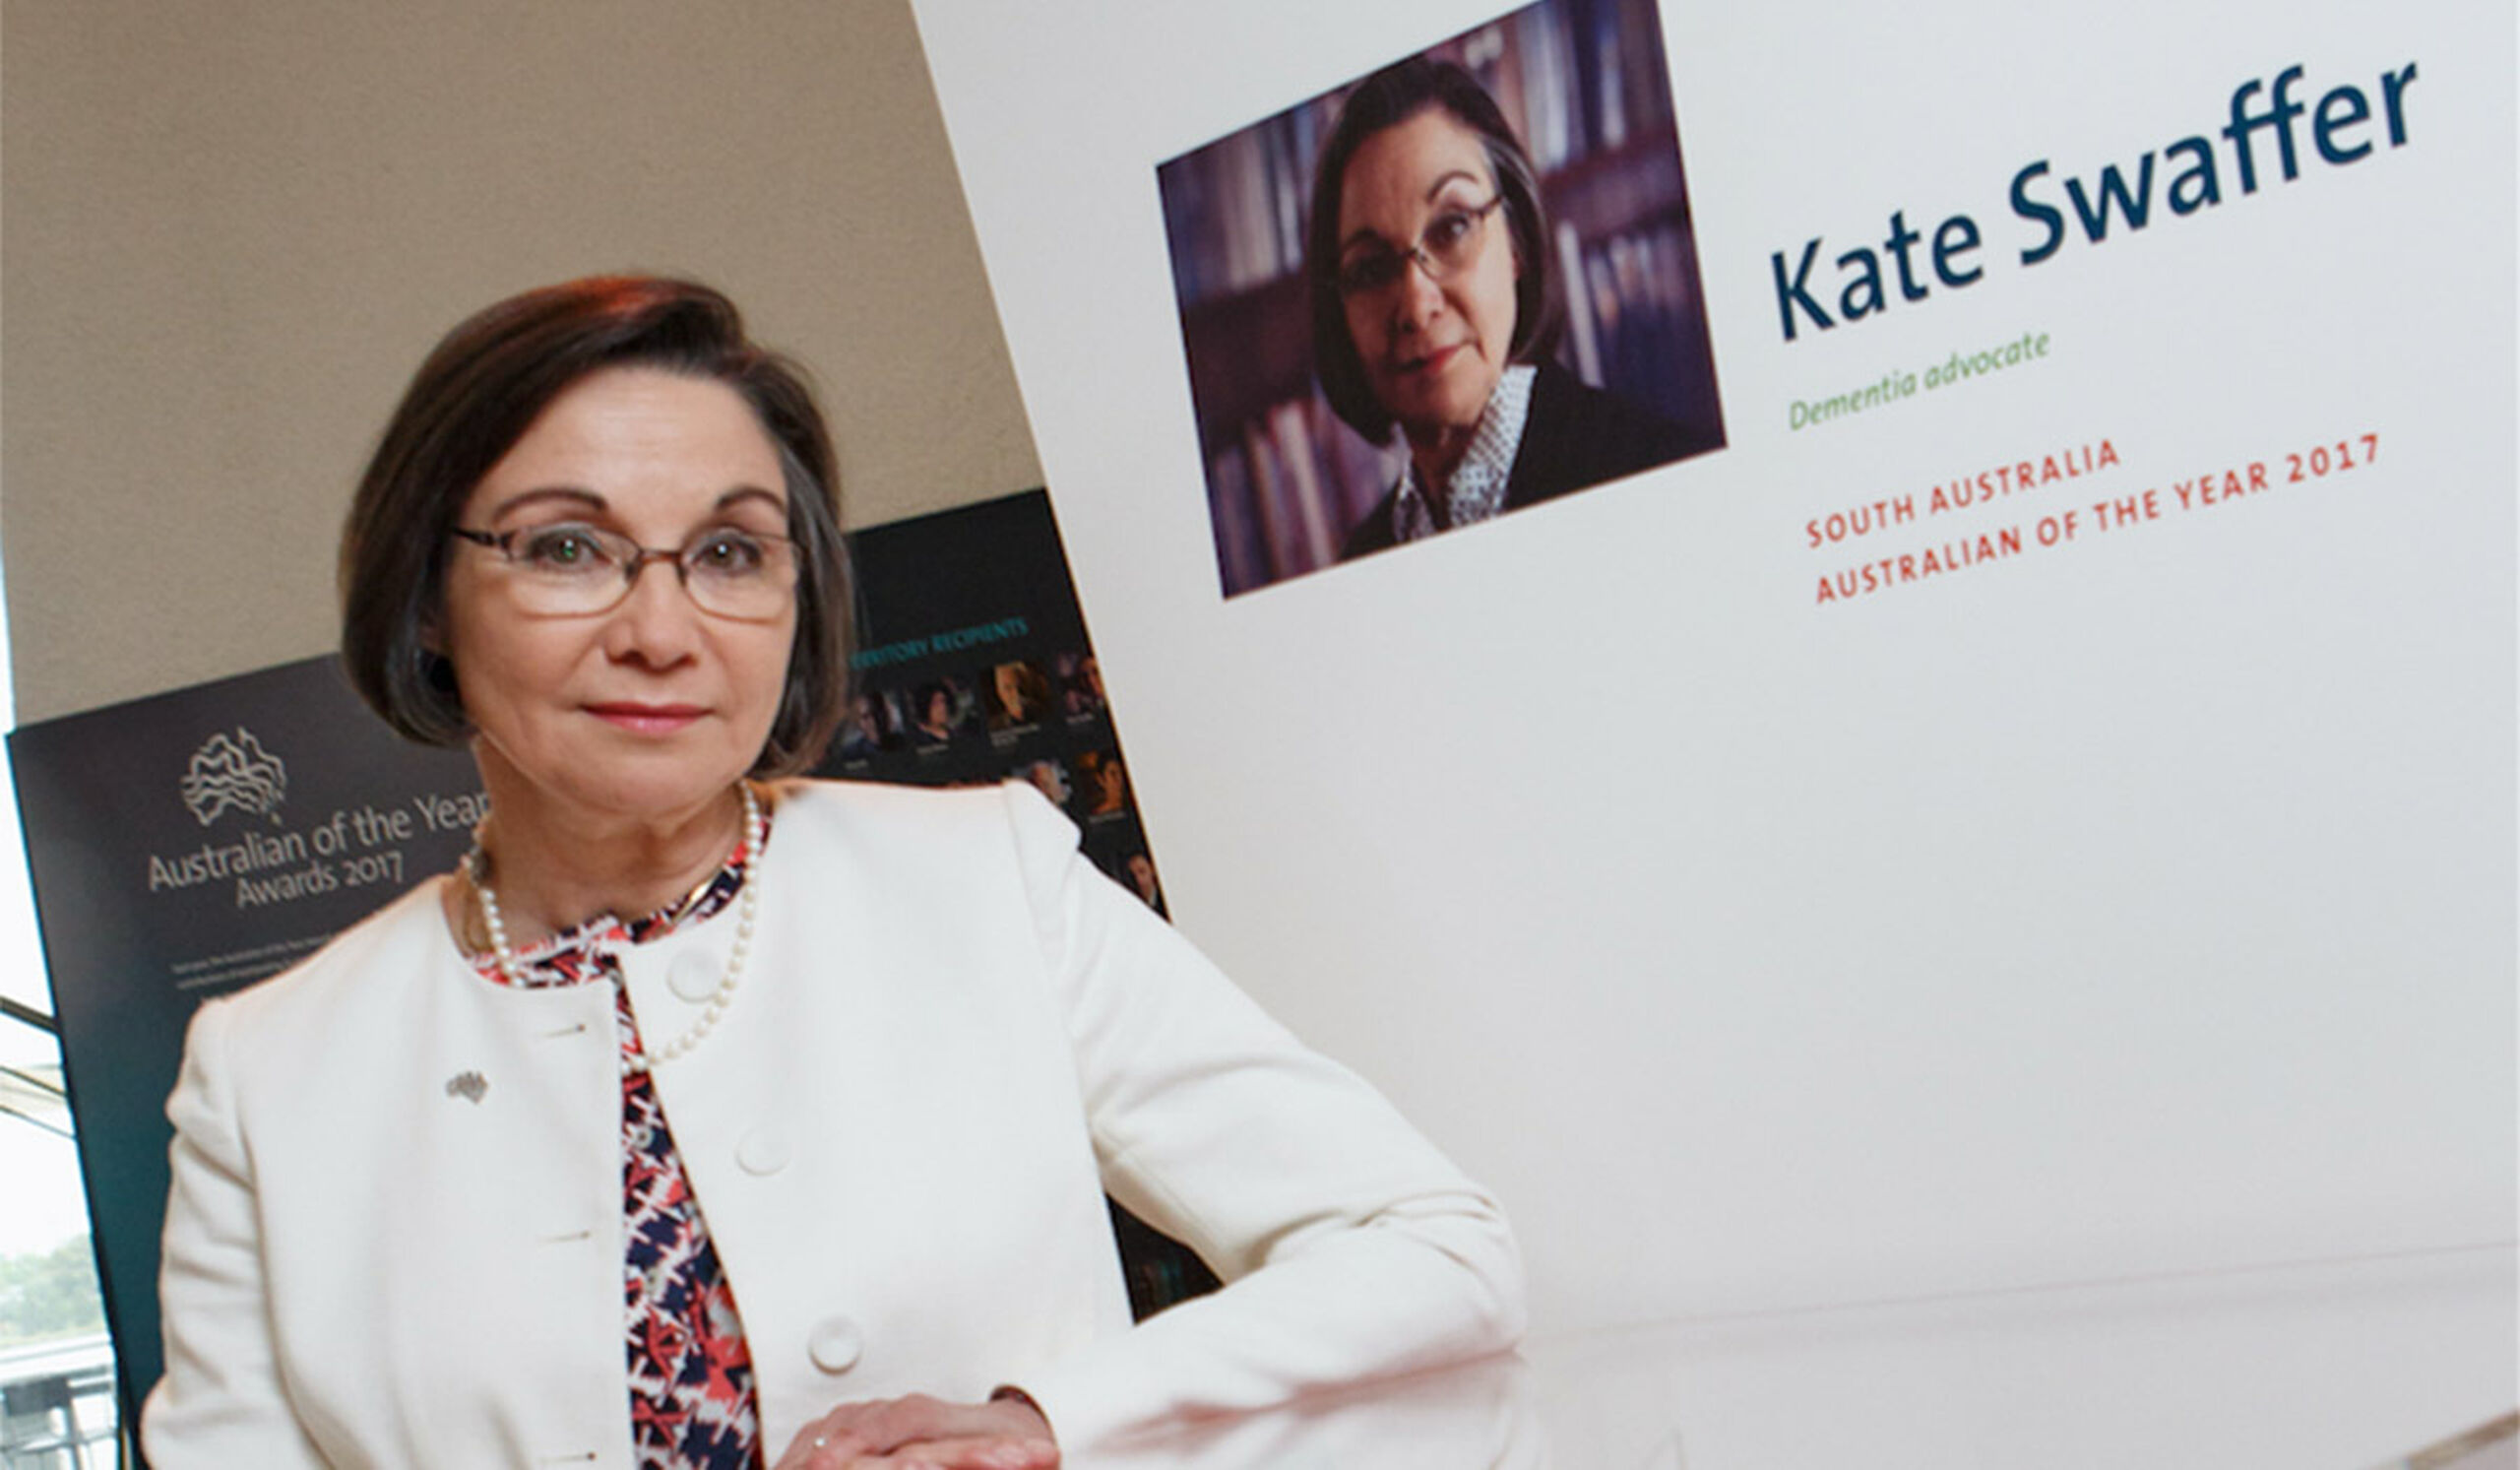 Dementia activist Kate Swaffer shares her remarkable story